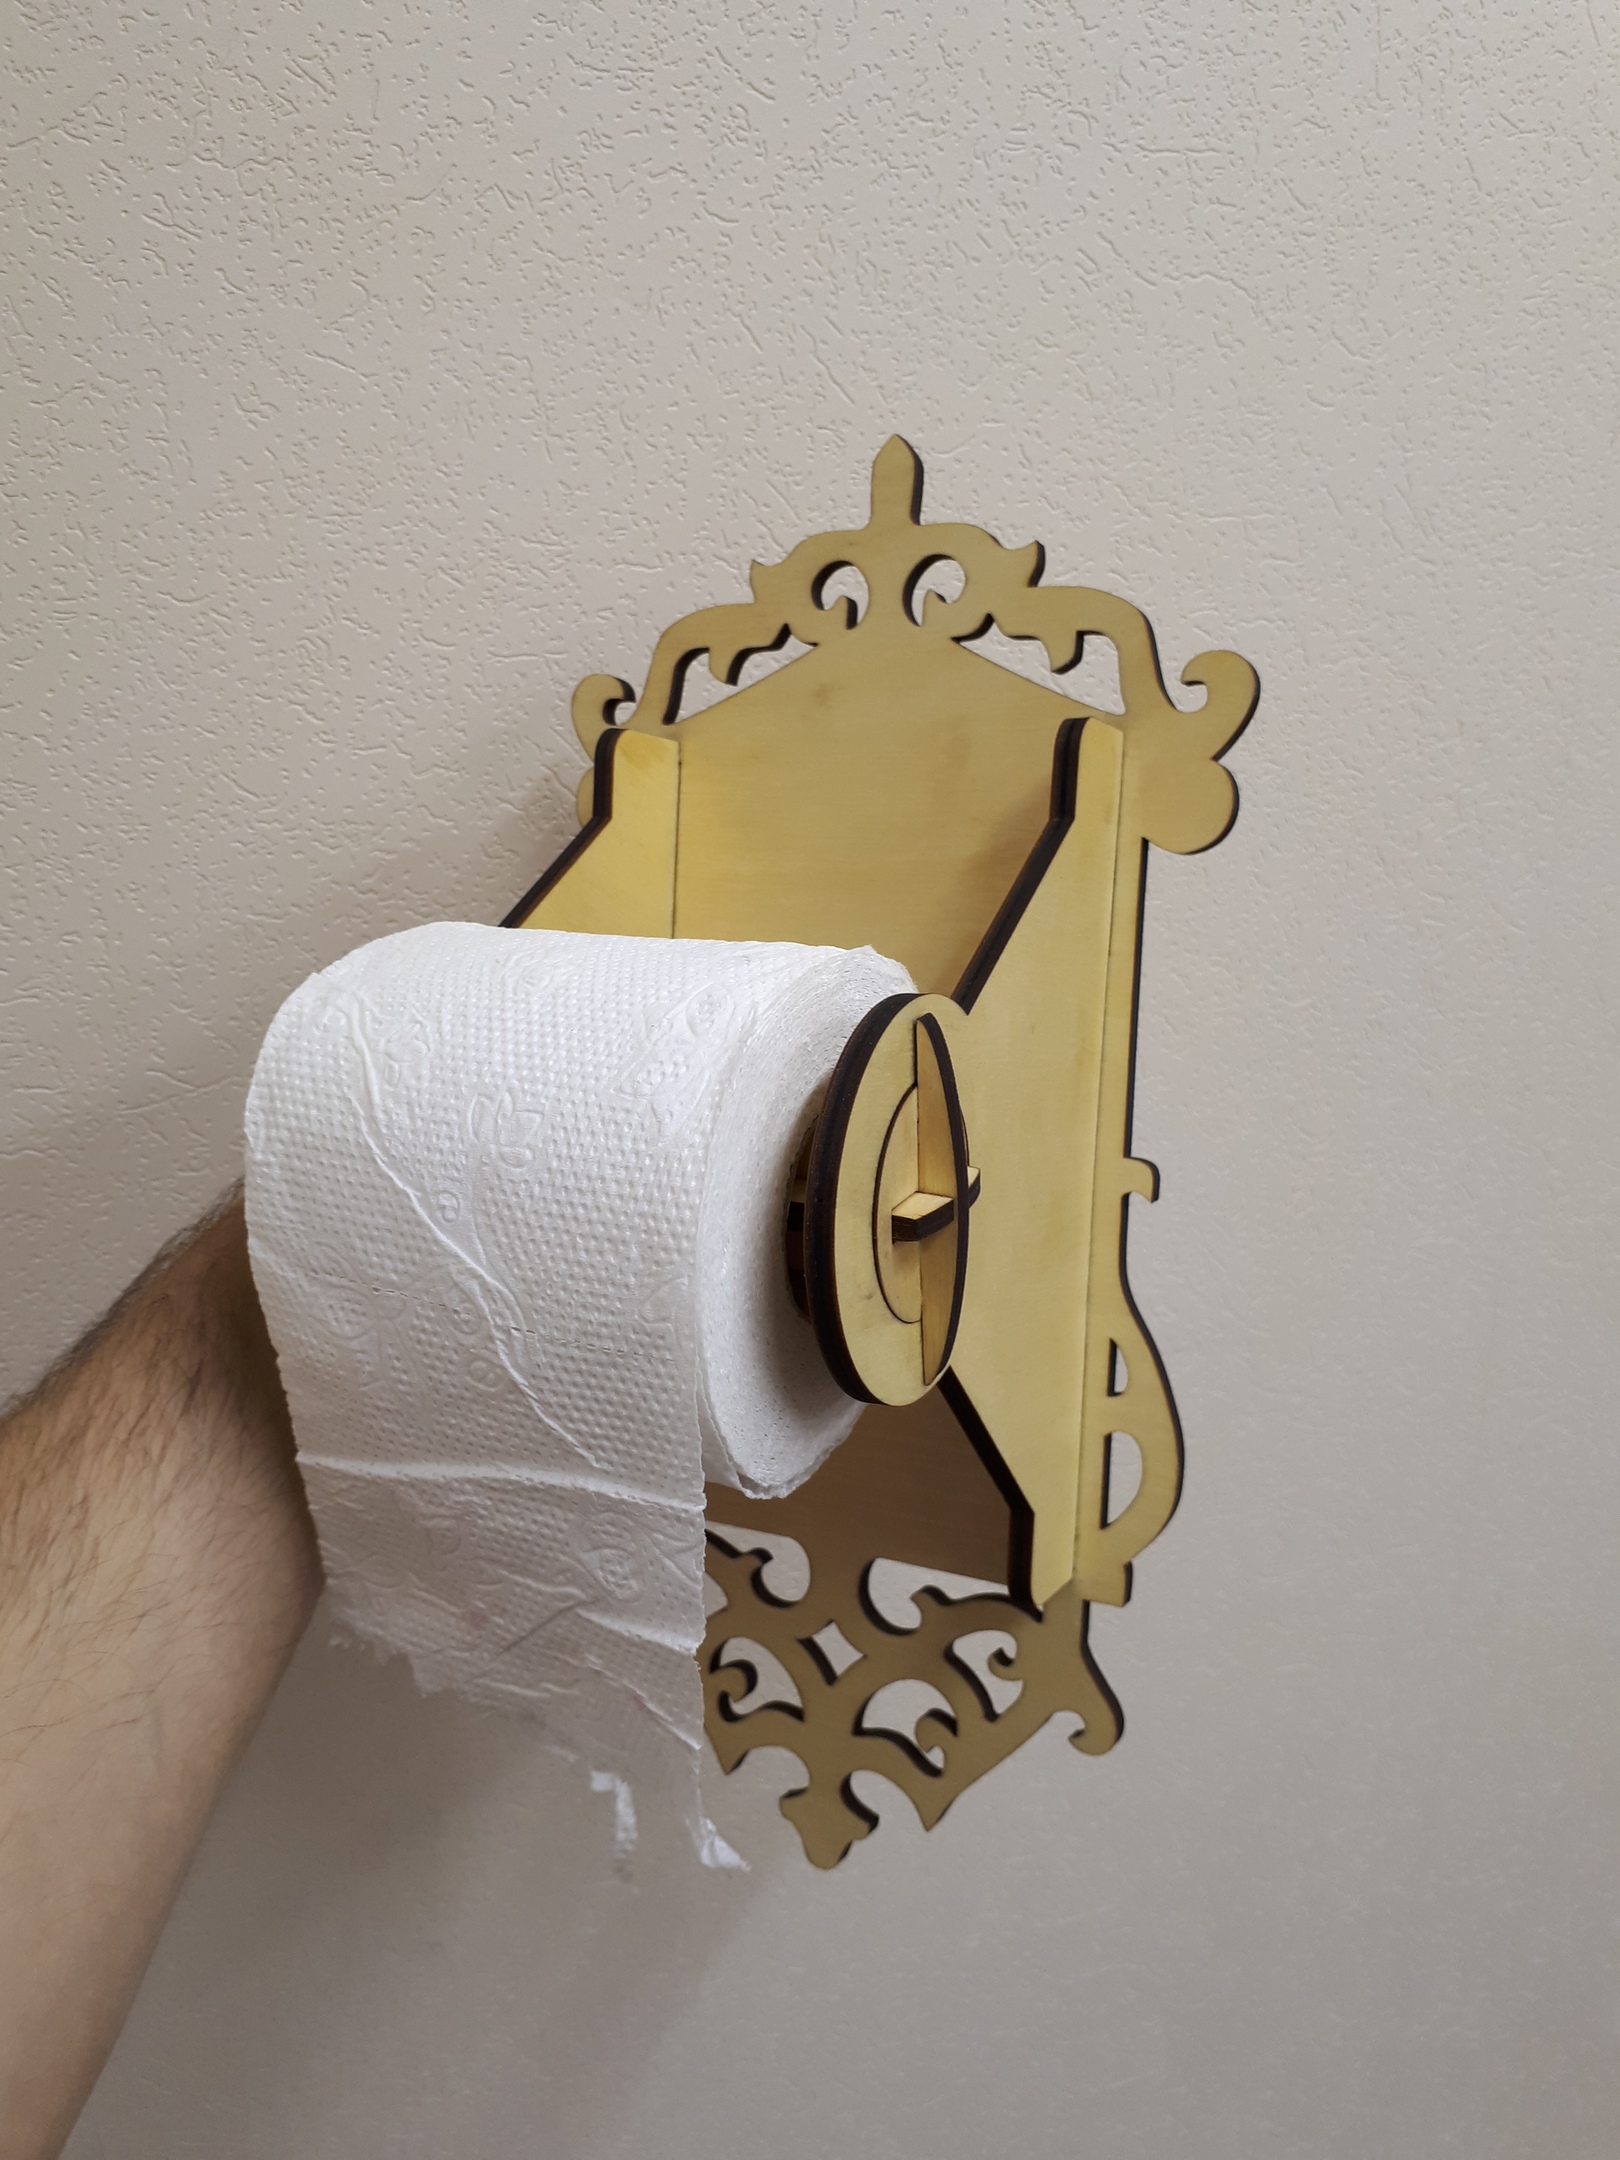 Toilet Paper Holder Laser cut Free Vector